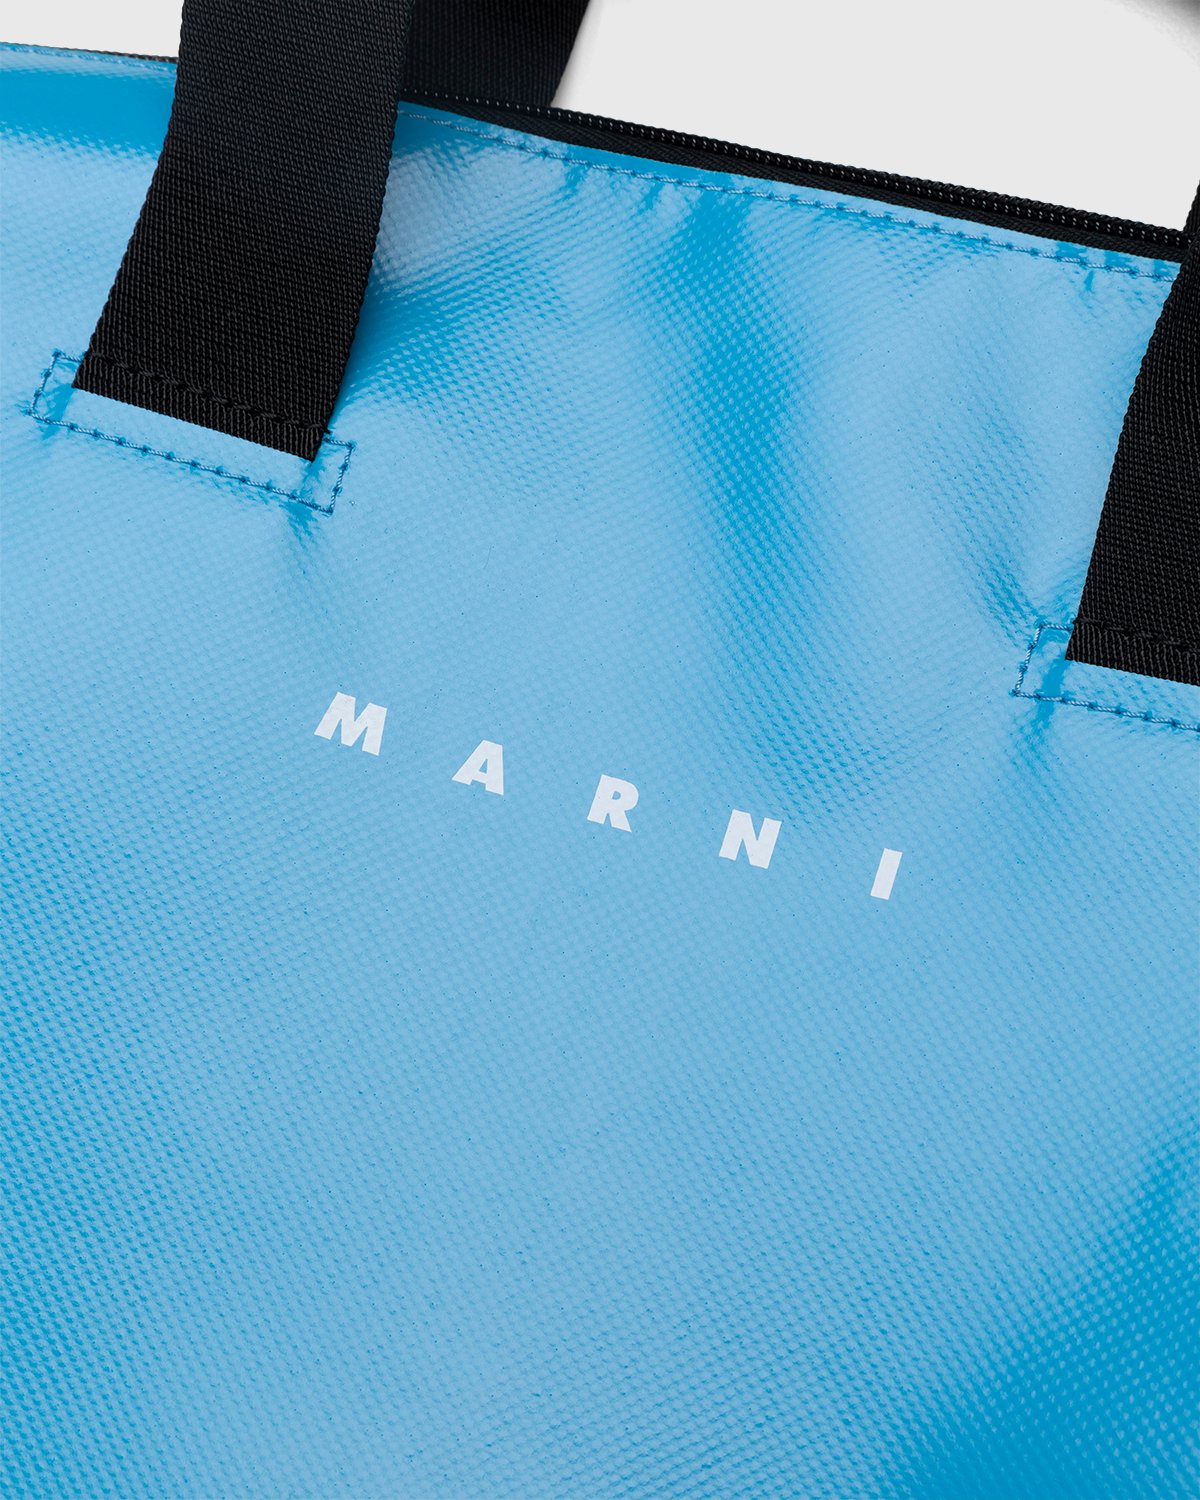 Marni - Bi-Colored PVC Tribeca Bag Blue Brown - Accessories - Blue - Image 3